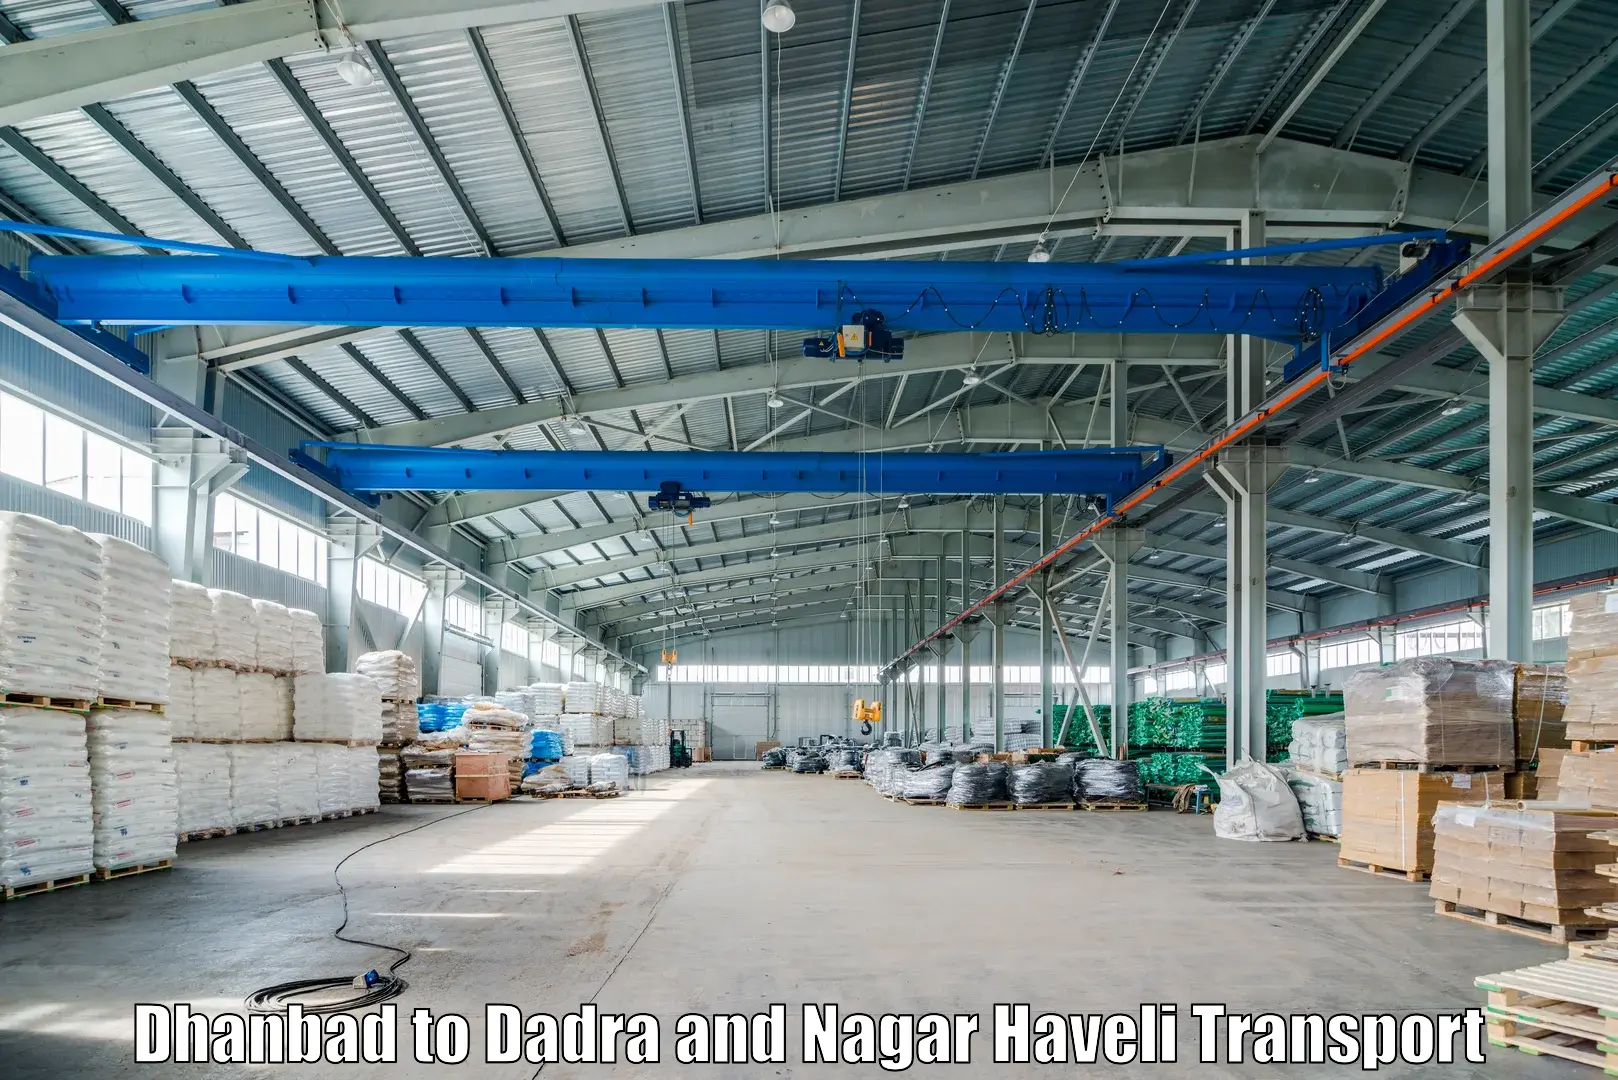 Shipping partner Dhanbad to Dadra and Nagar Haveli